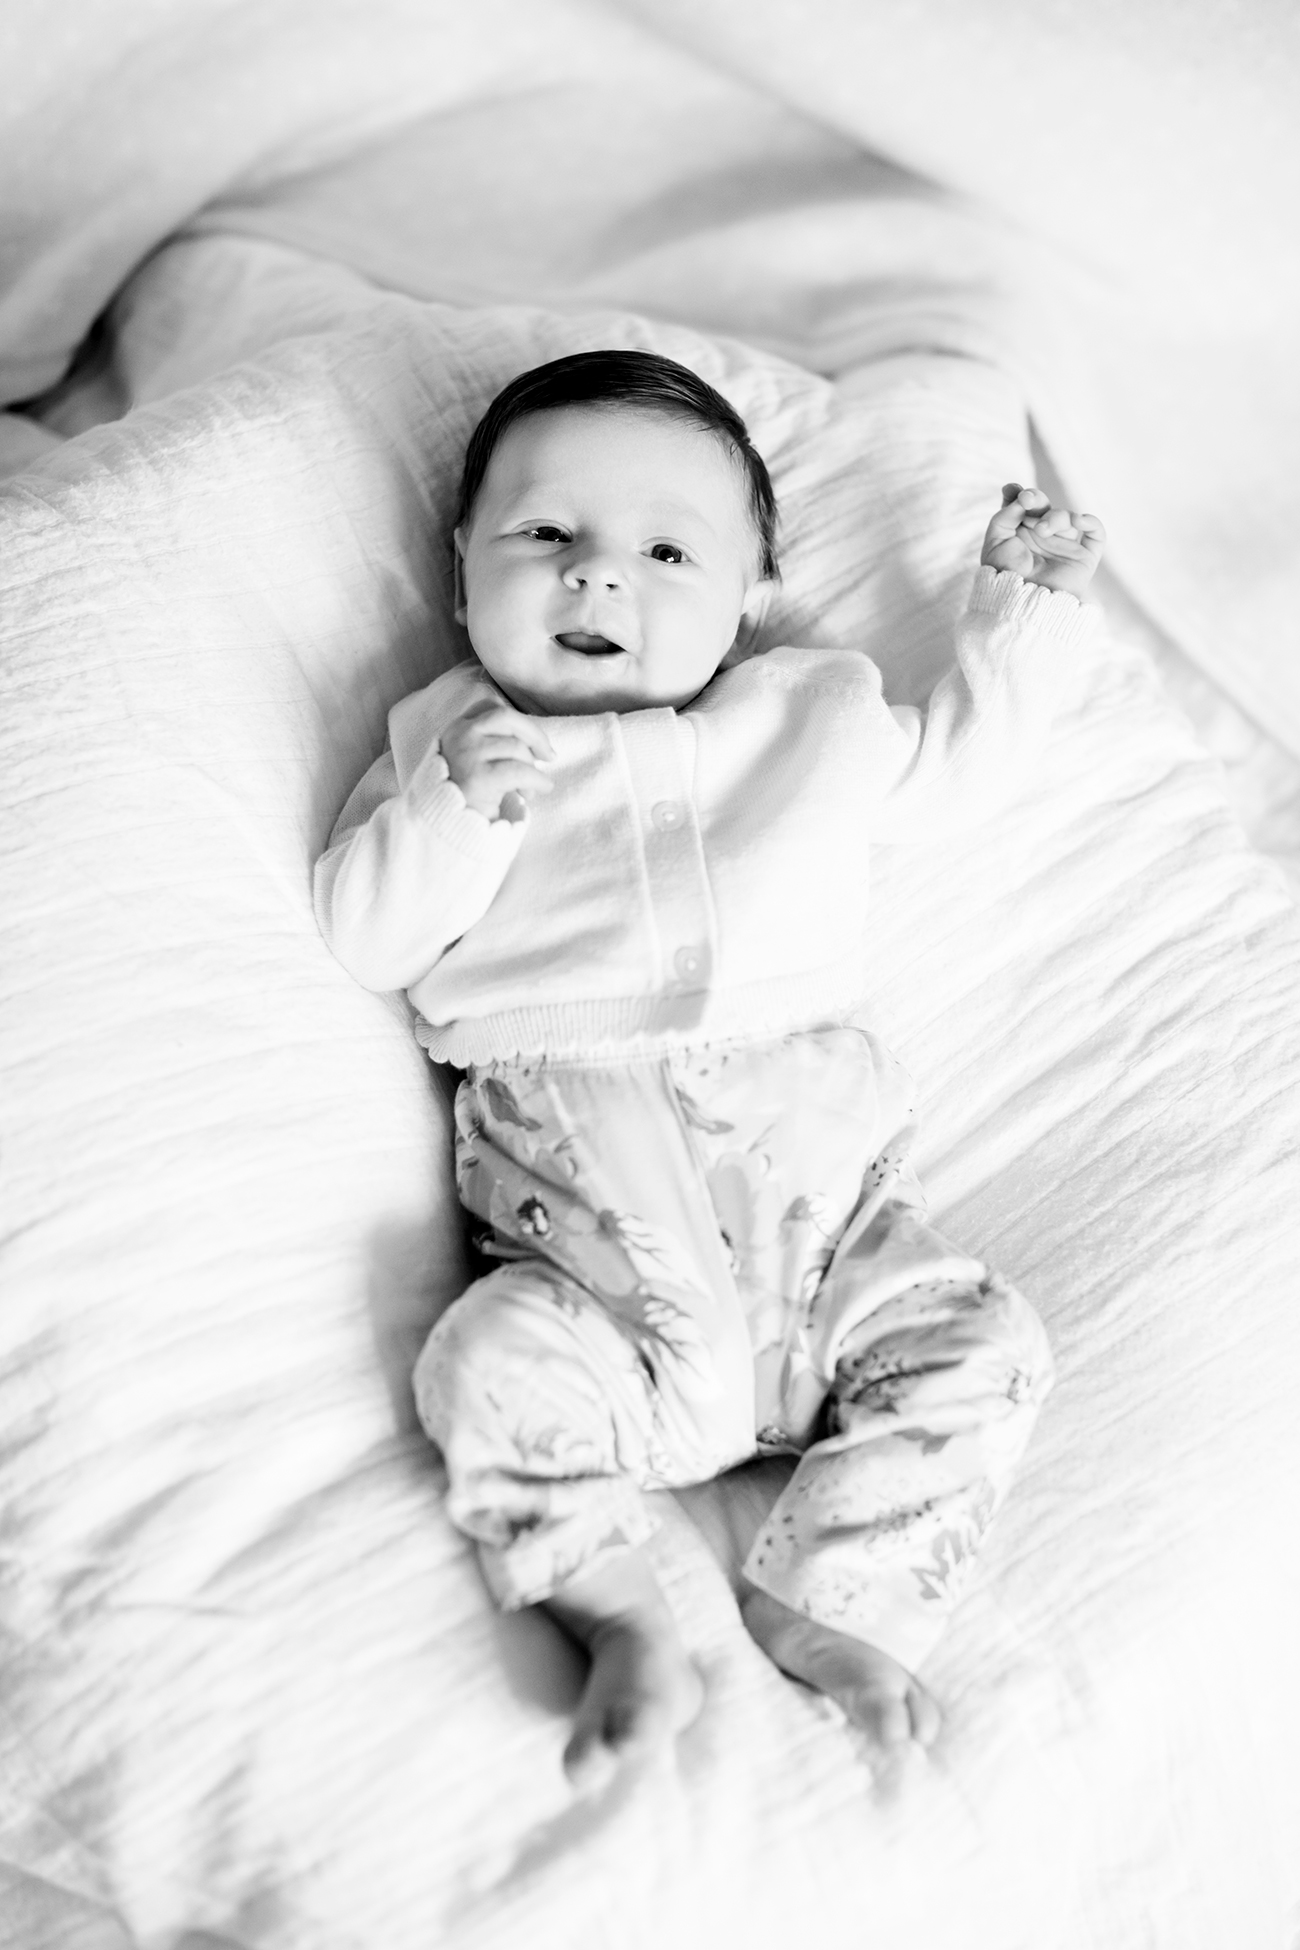 Baby Girl Ellies Newborn Shoot - Image Property of www.j-dphoto.com